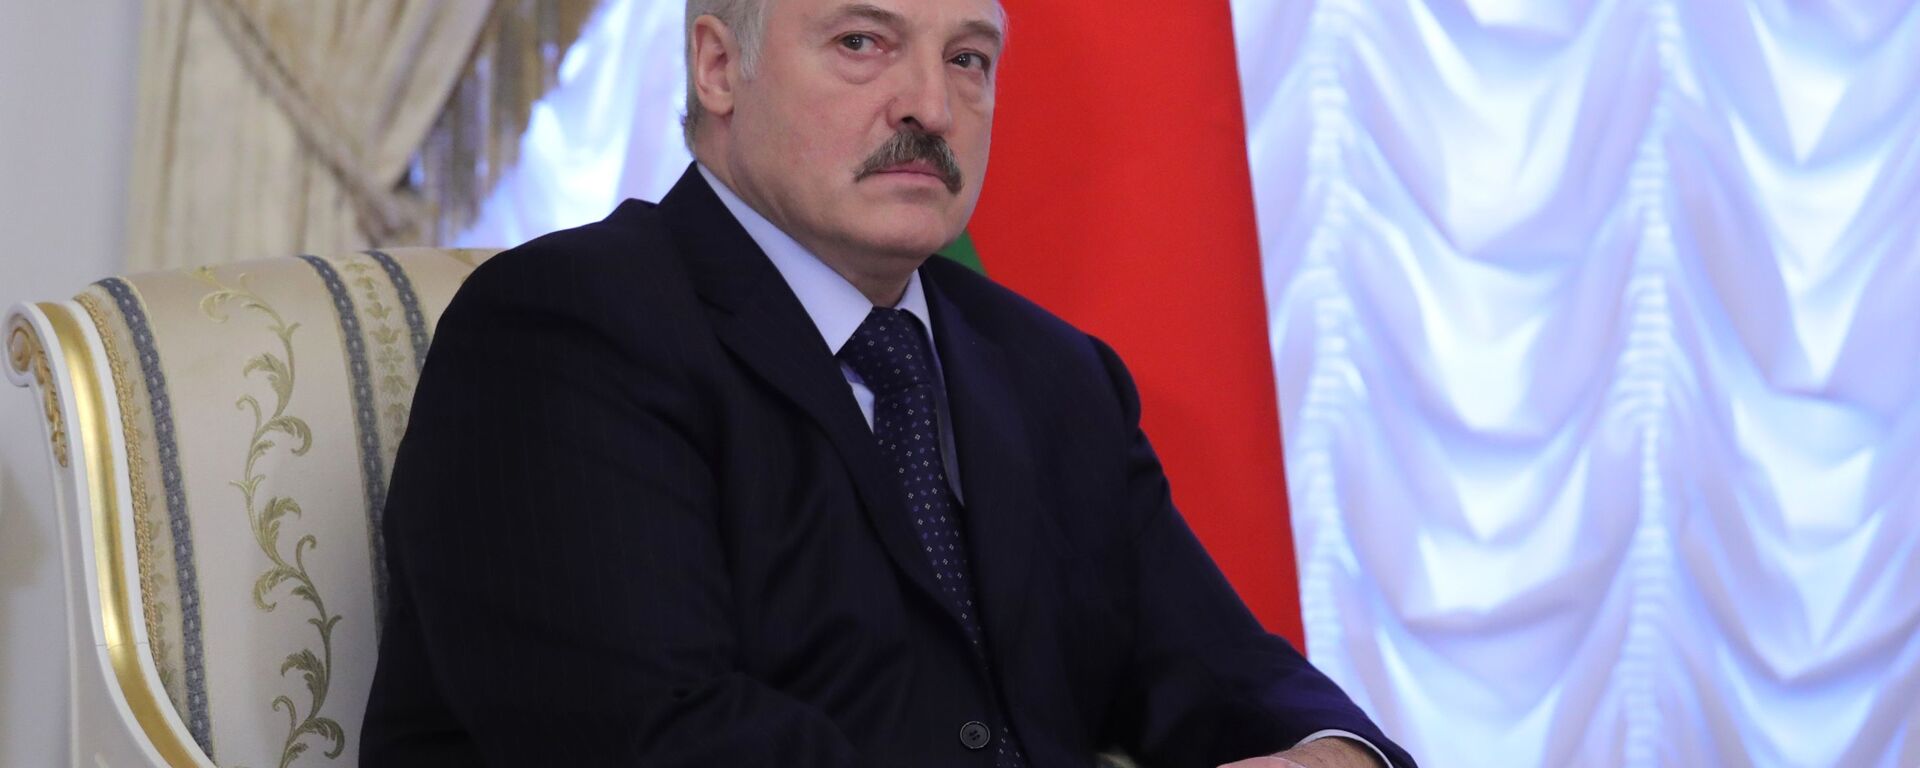 Tổng thống Belarus Alexandr Lukashenko  - Sputnik Việt Nam, 1920, 09.08.2021